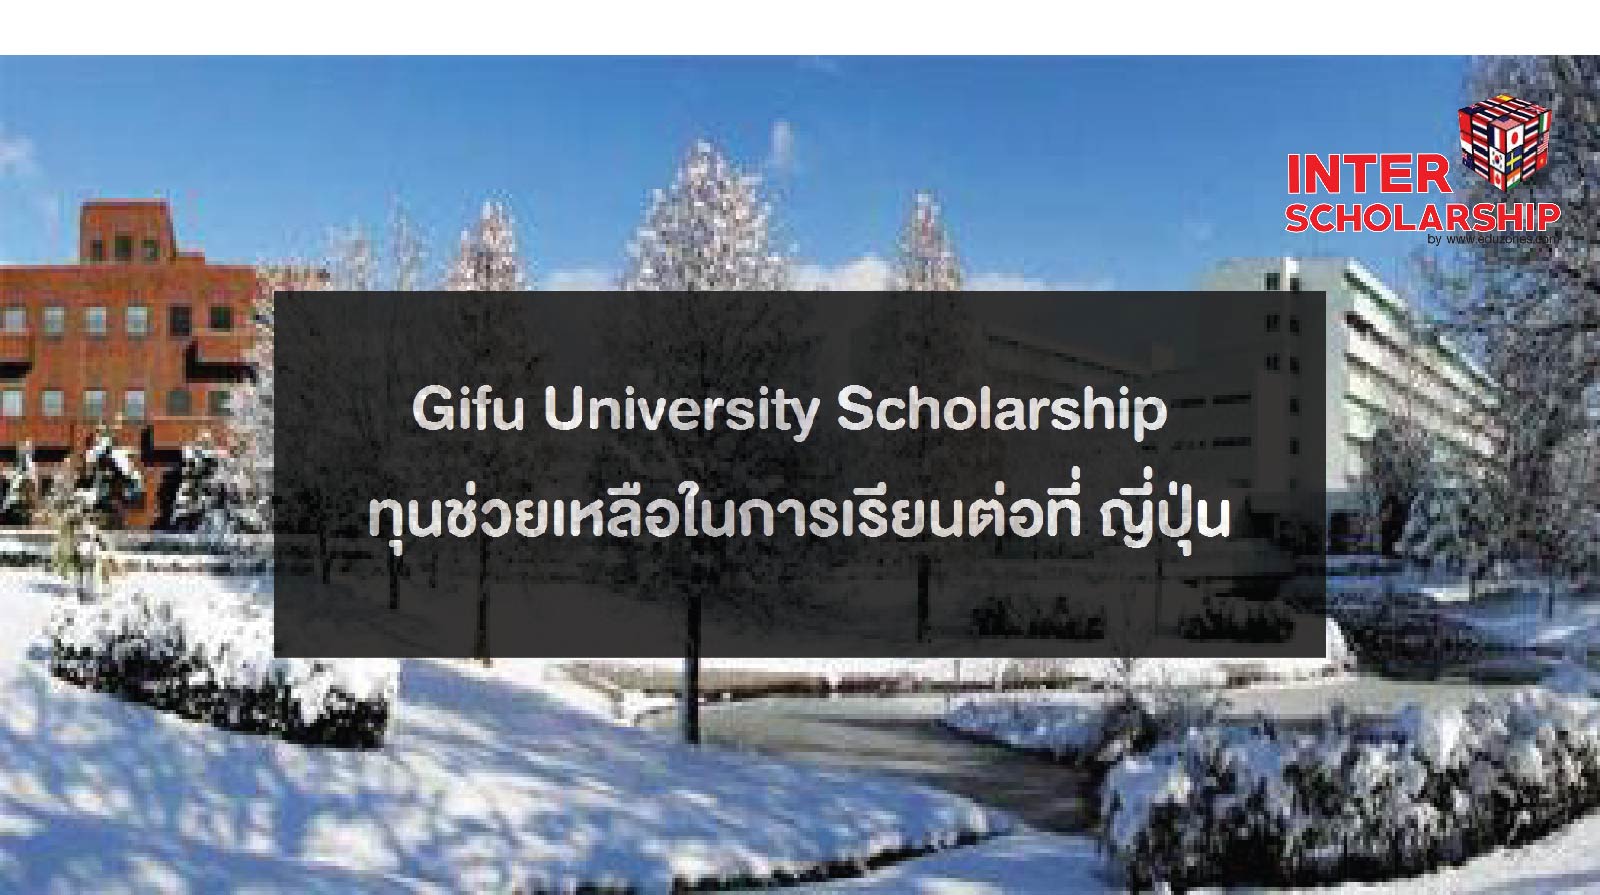 Gifu University Scholars